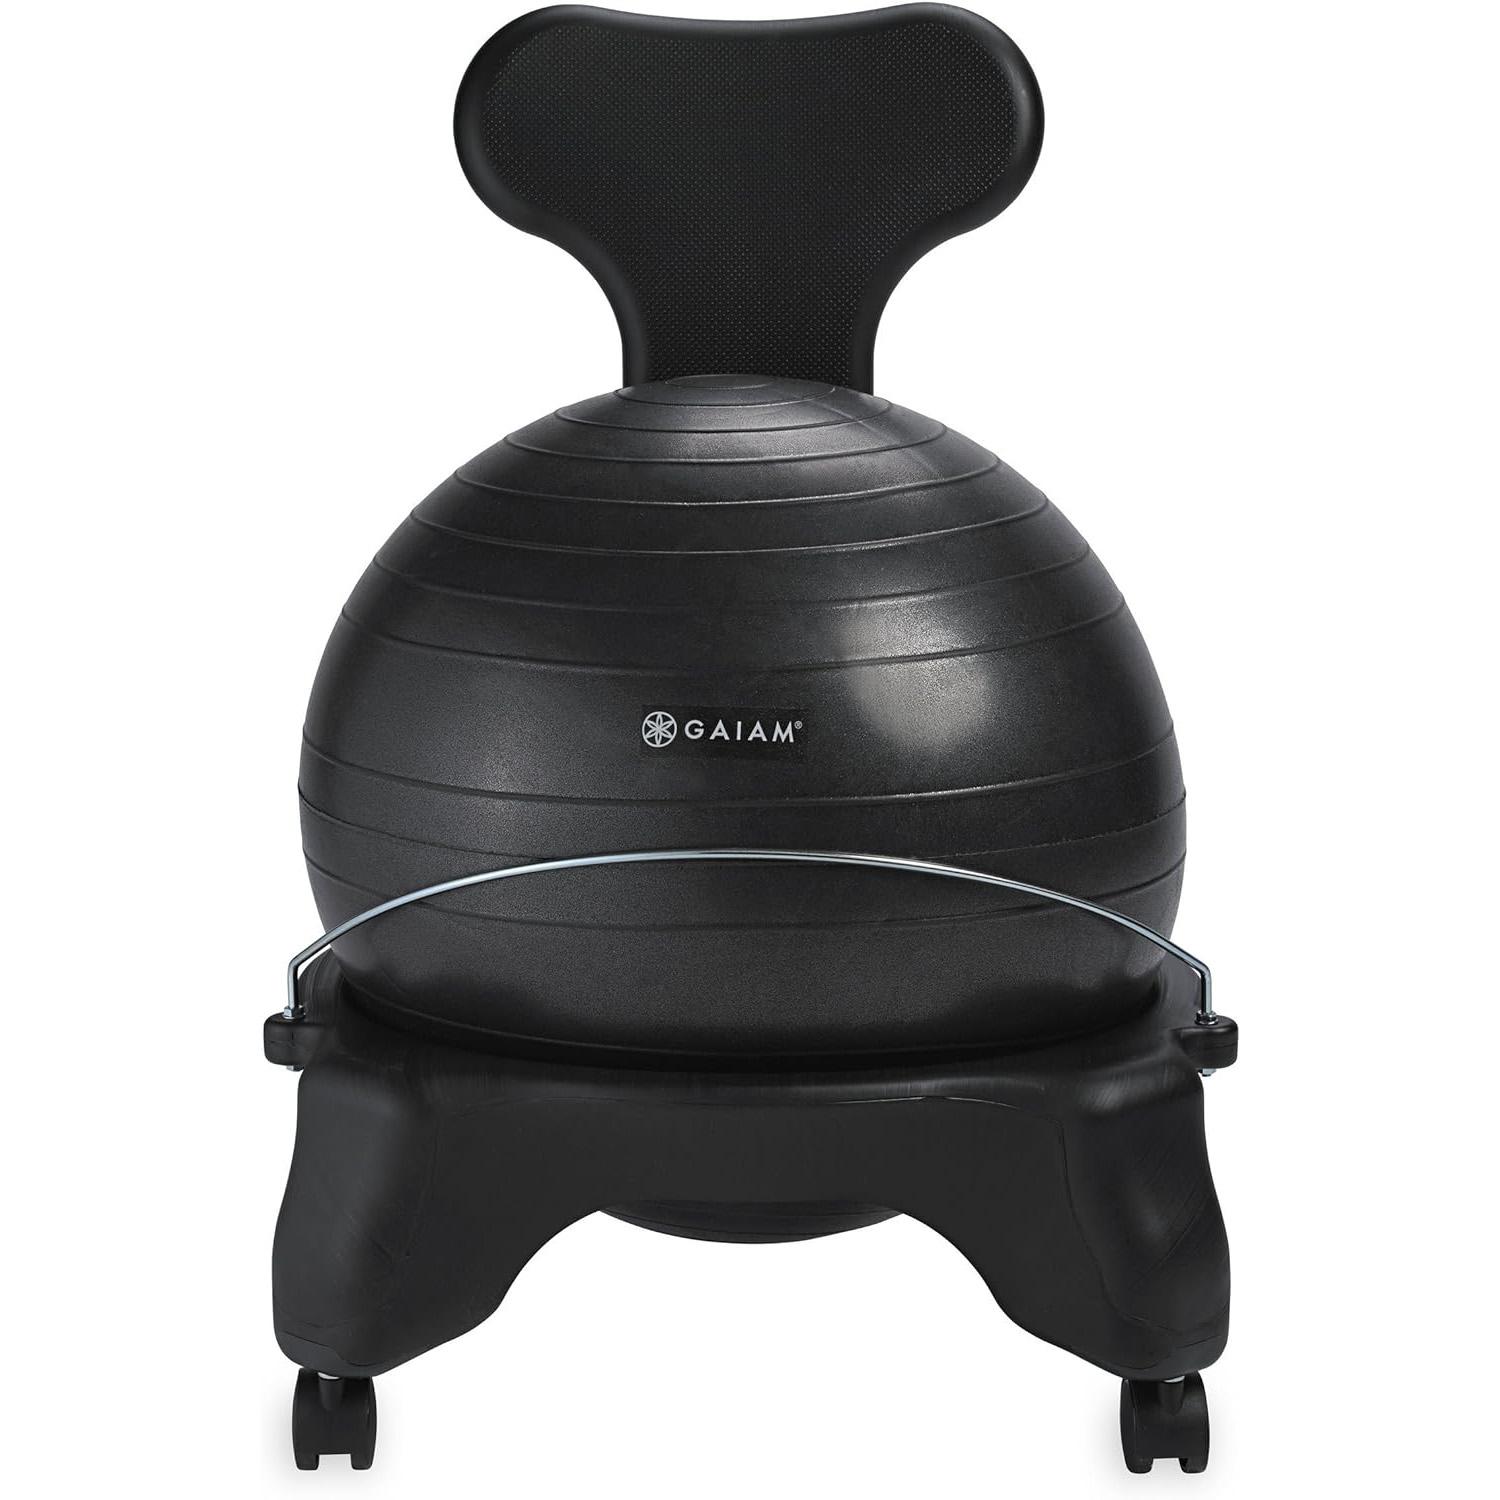 Gaiam Classic Balance Ball Chair for $39.99 Shipped